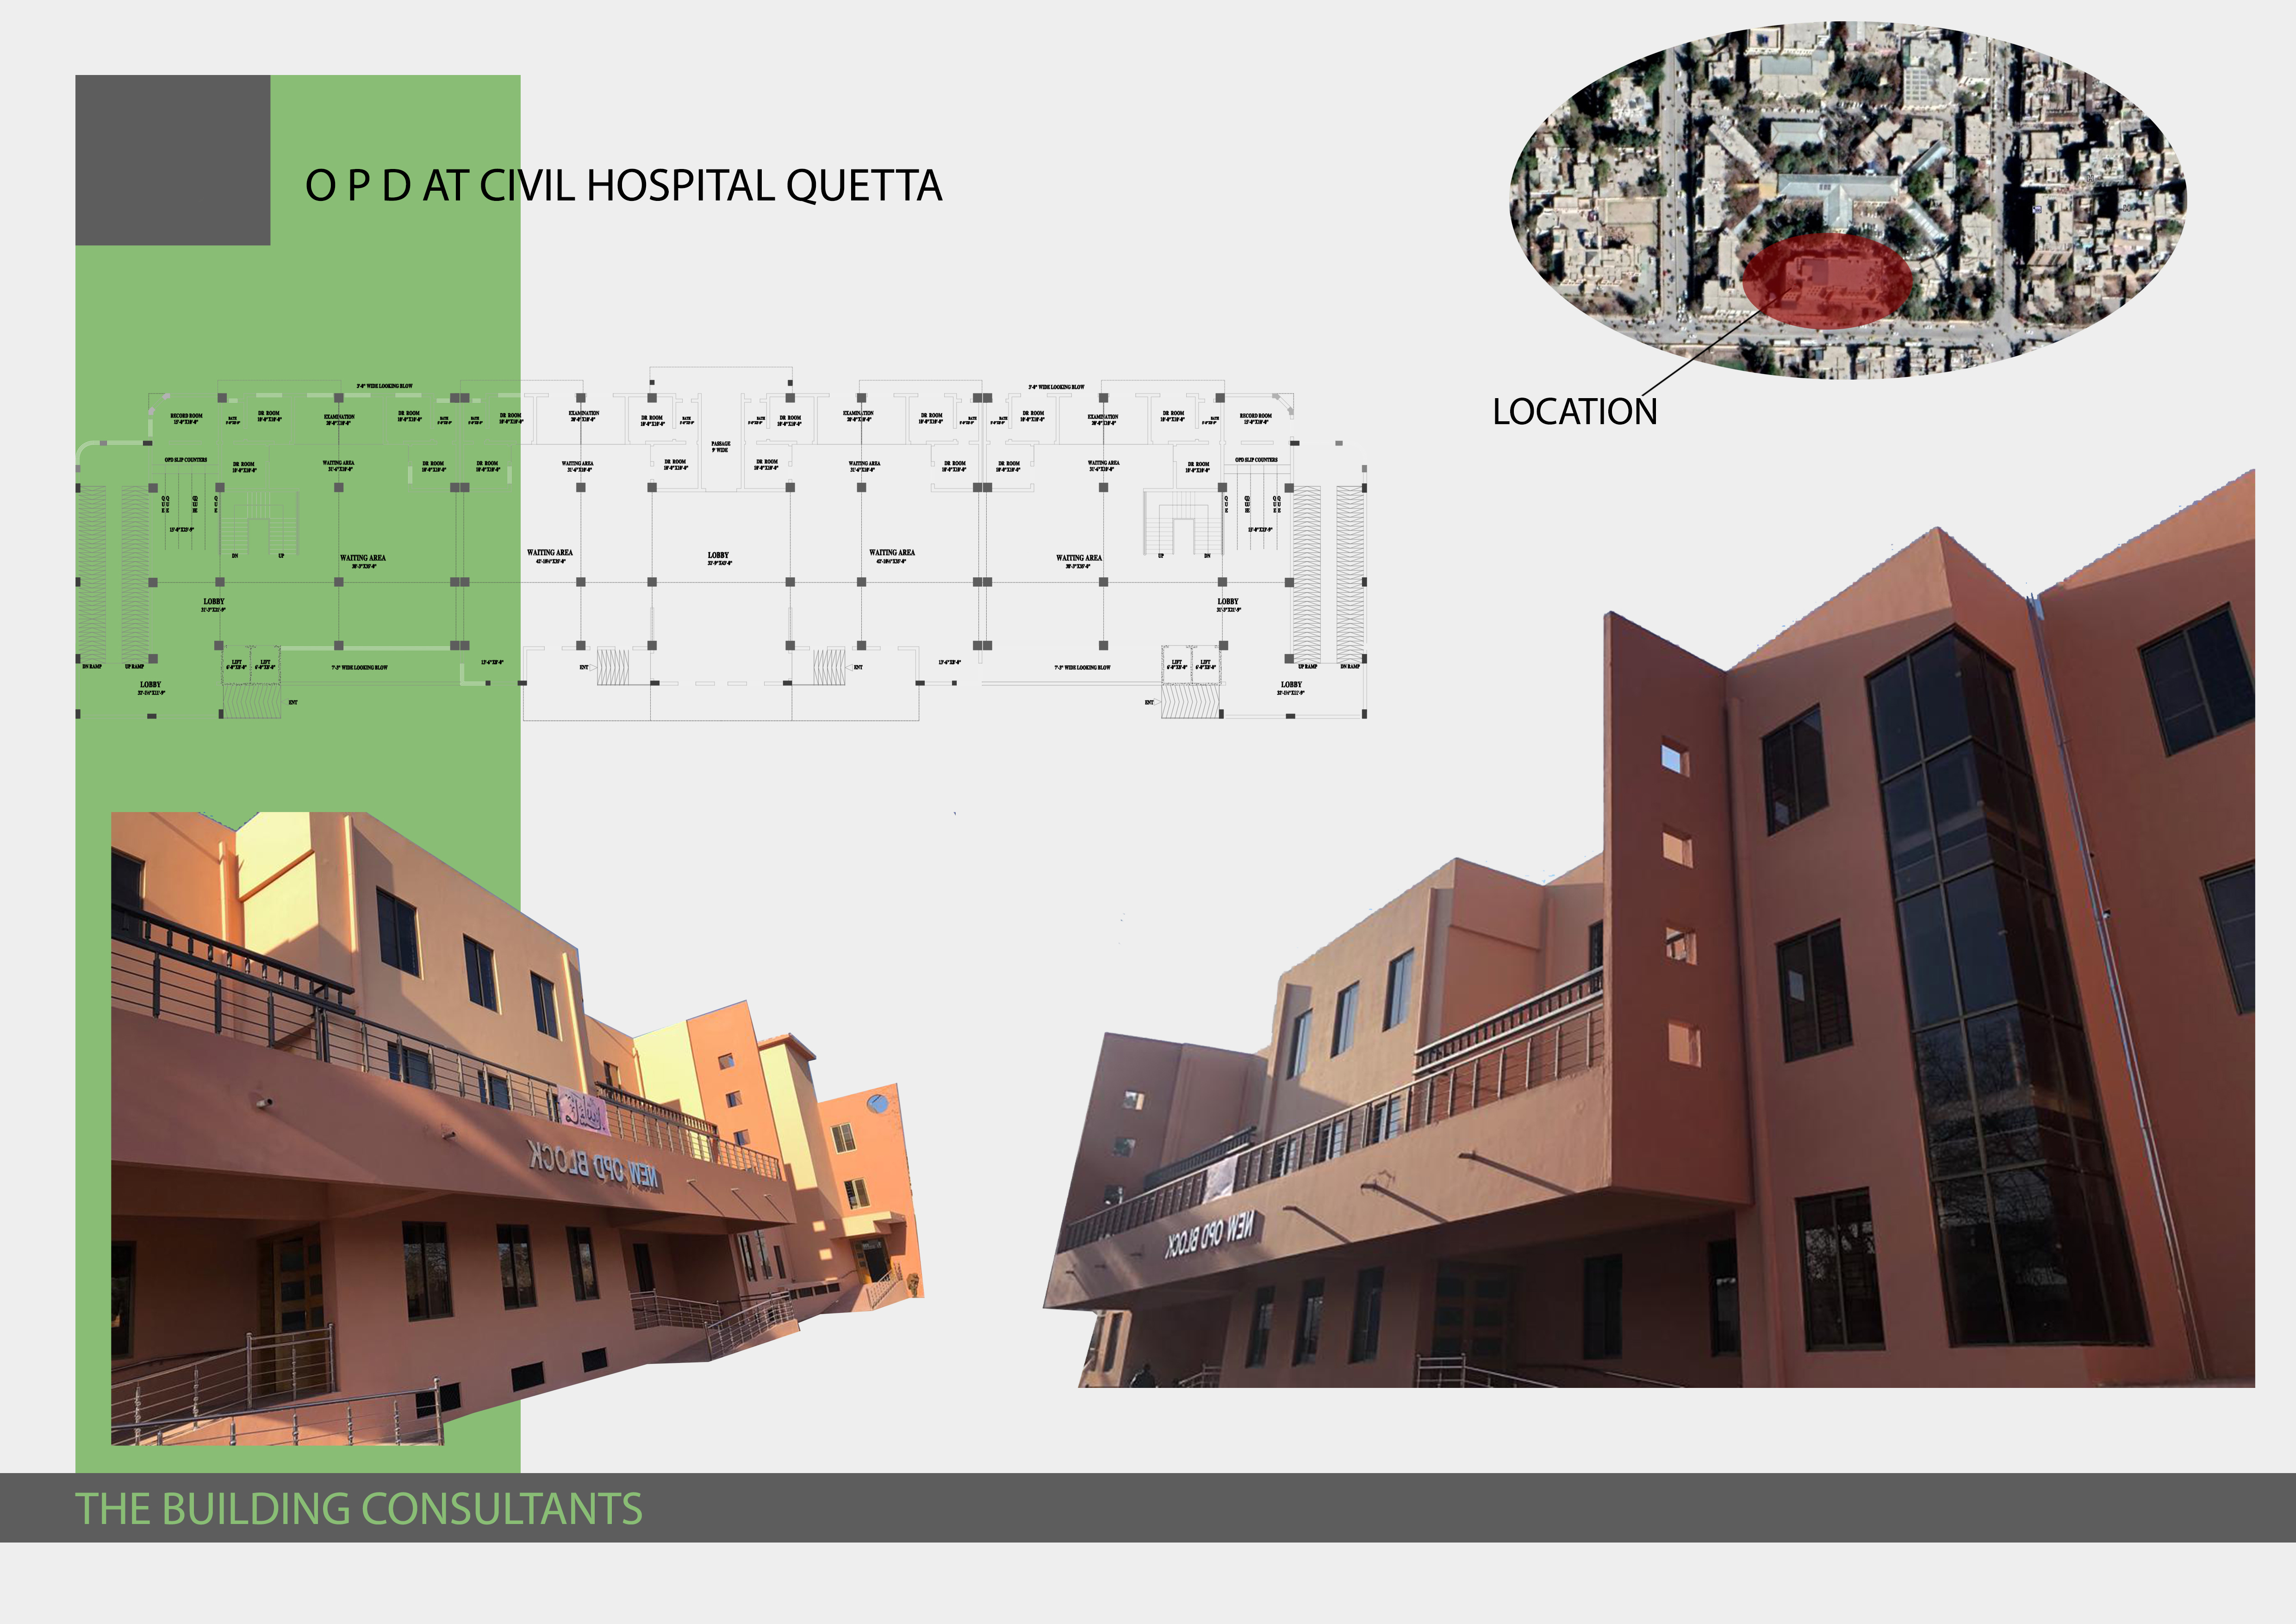 New OPD Block at Civil Hospital